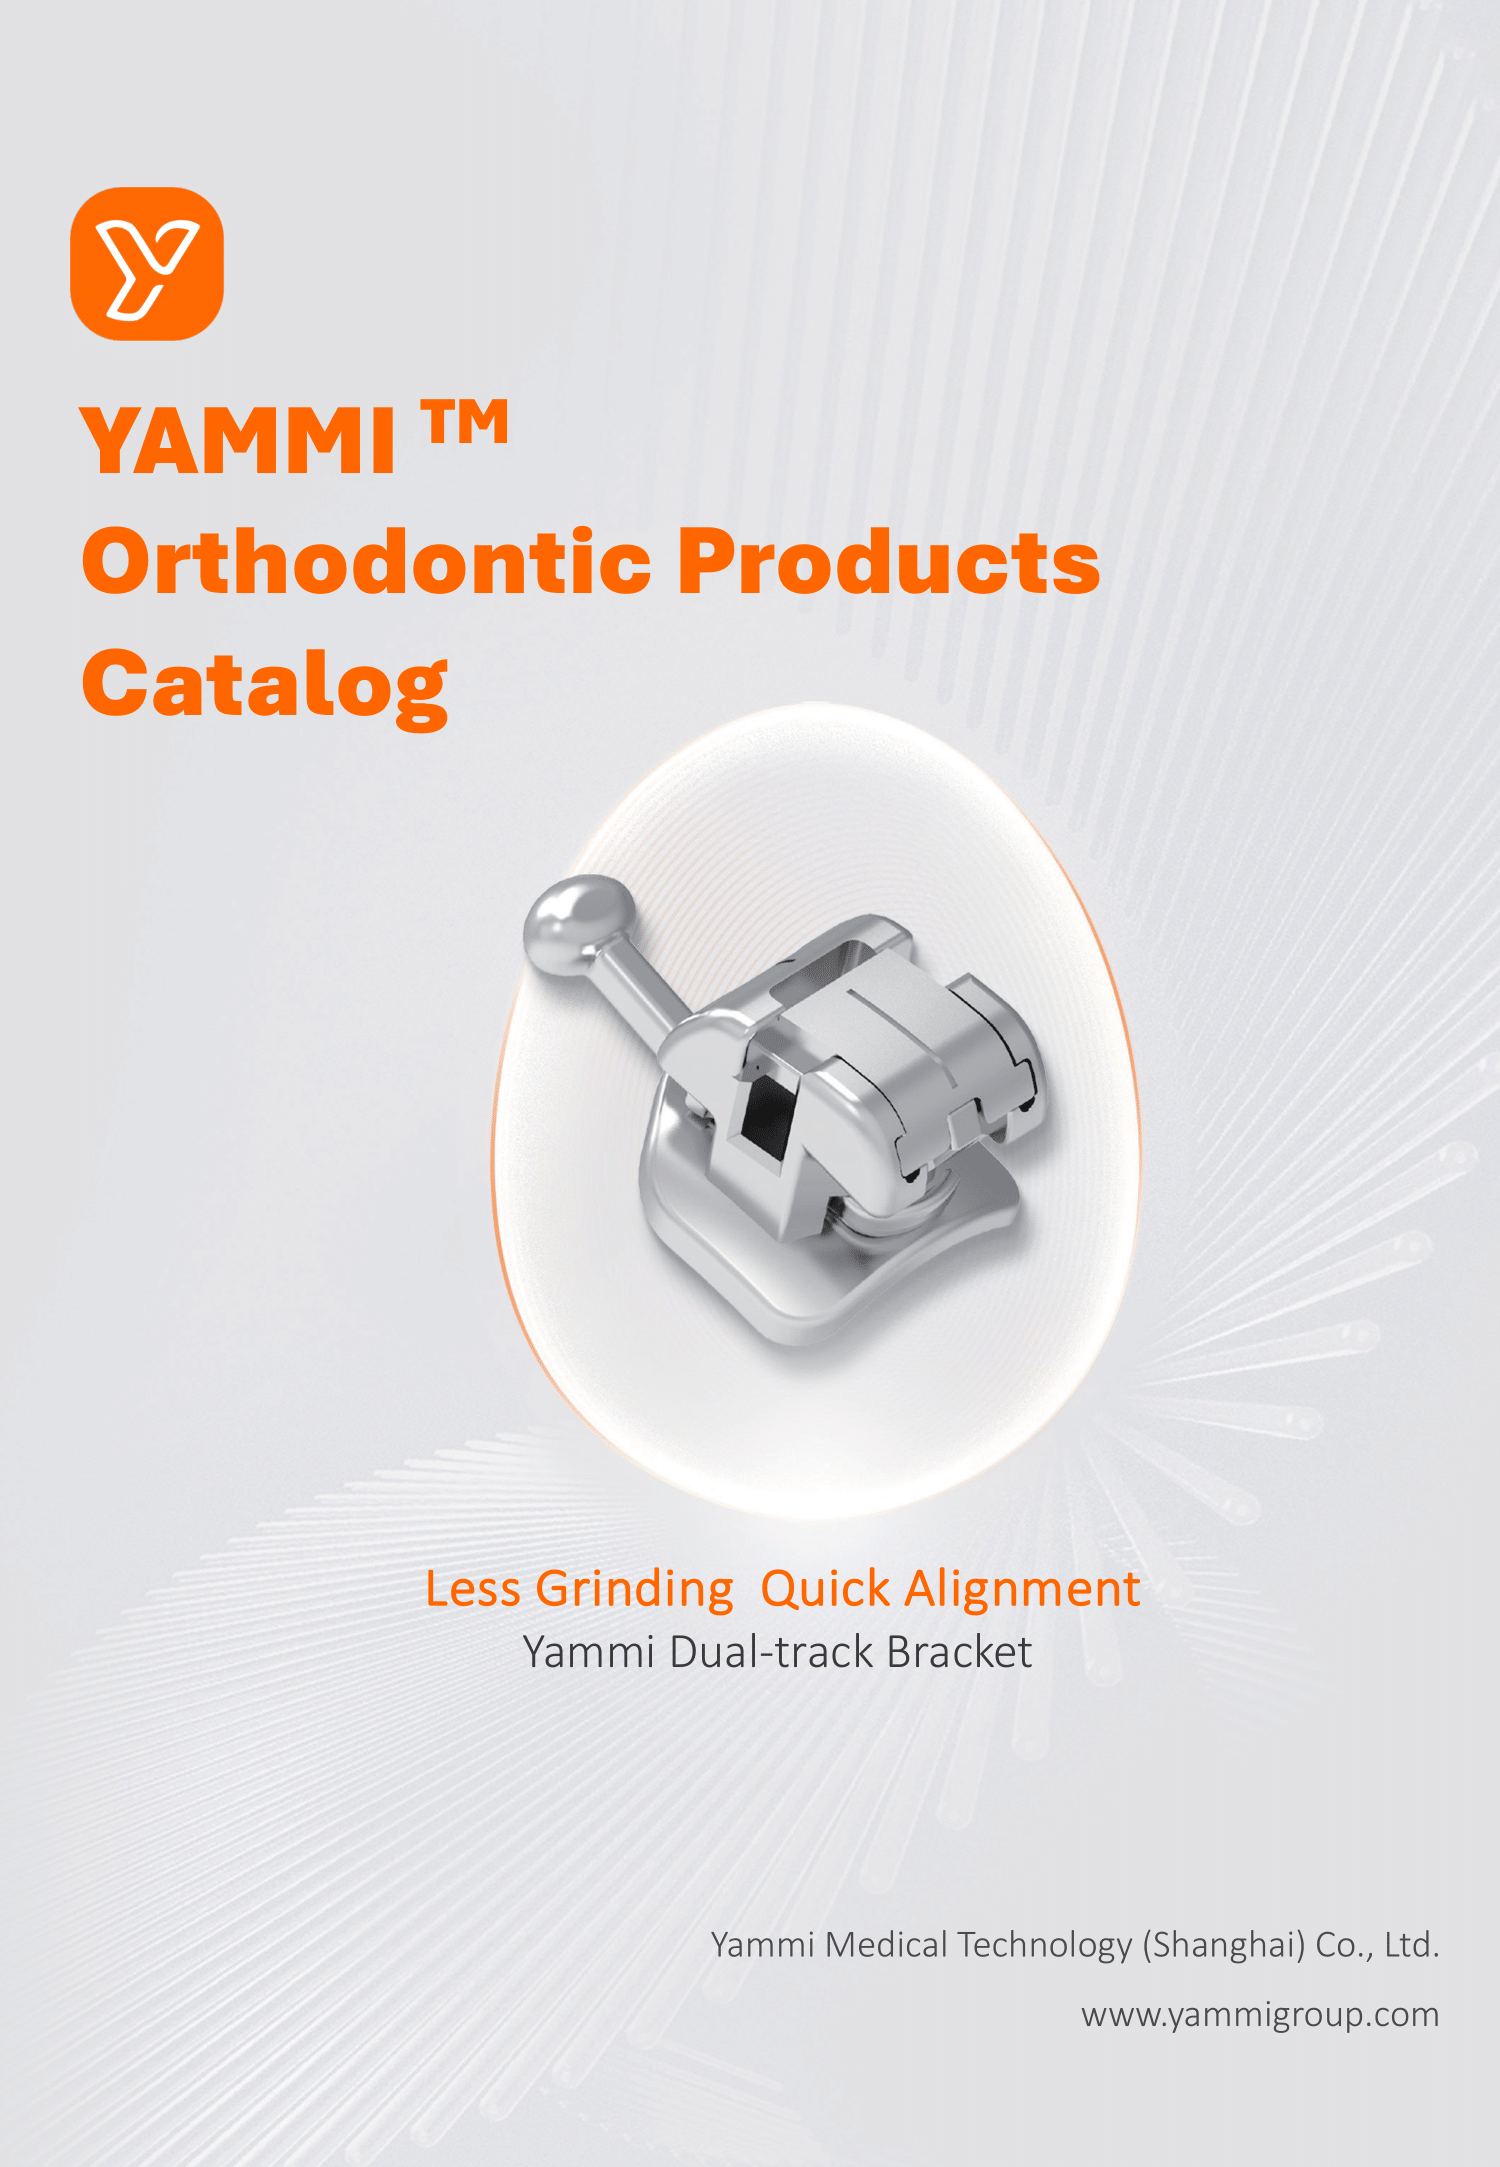 yammi catalog-0830-01